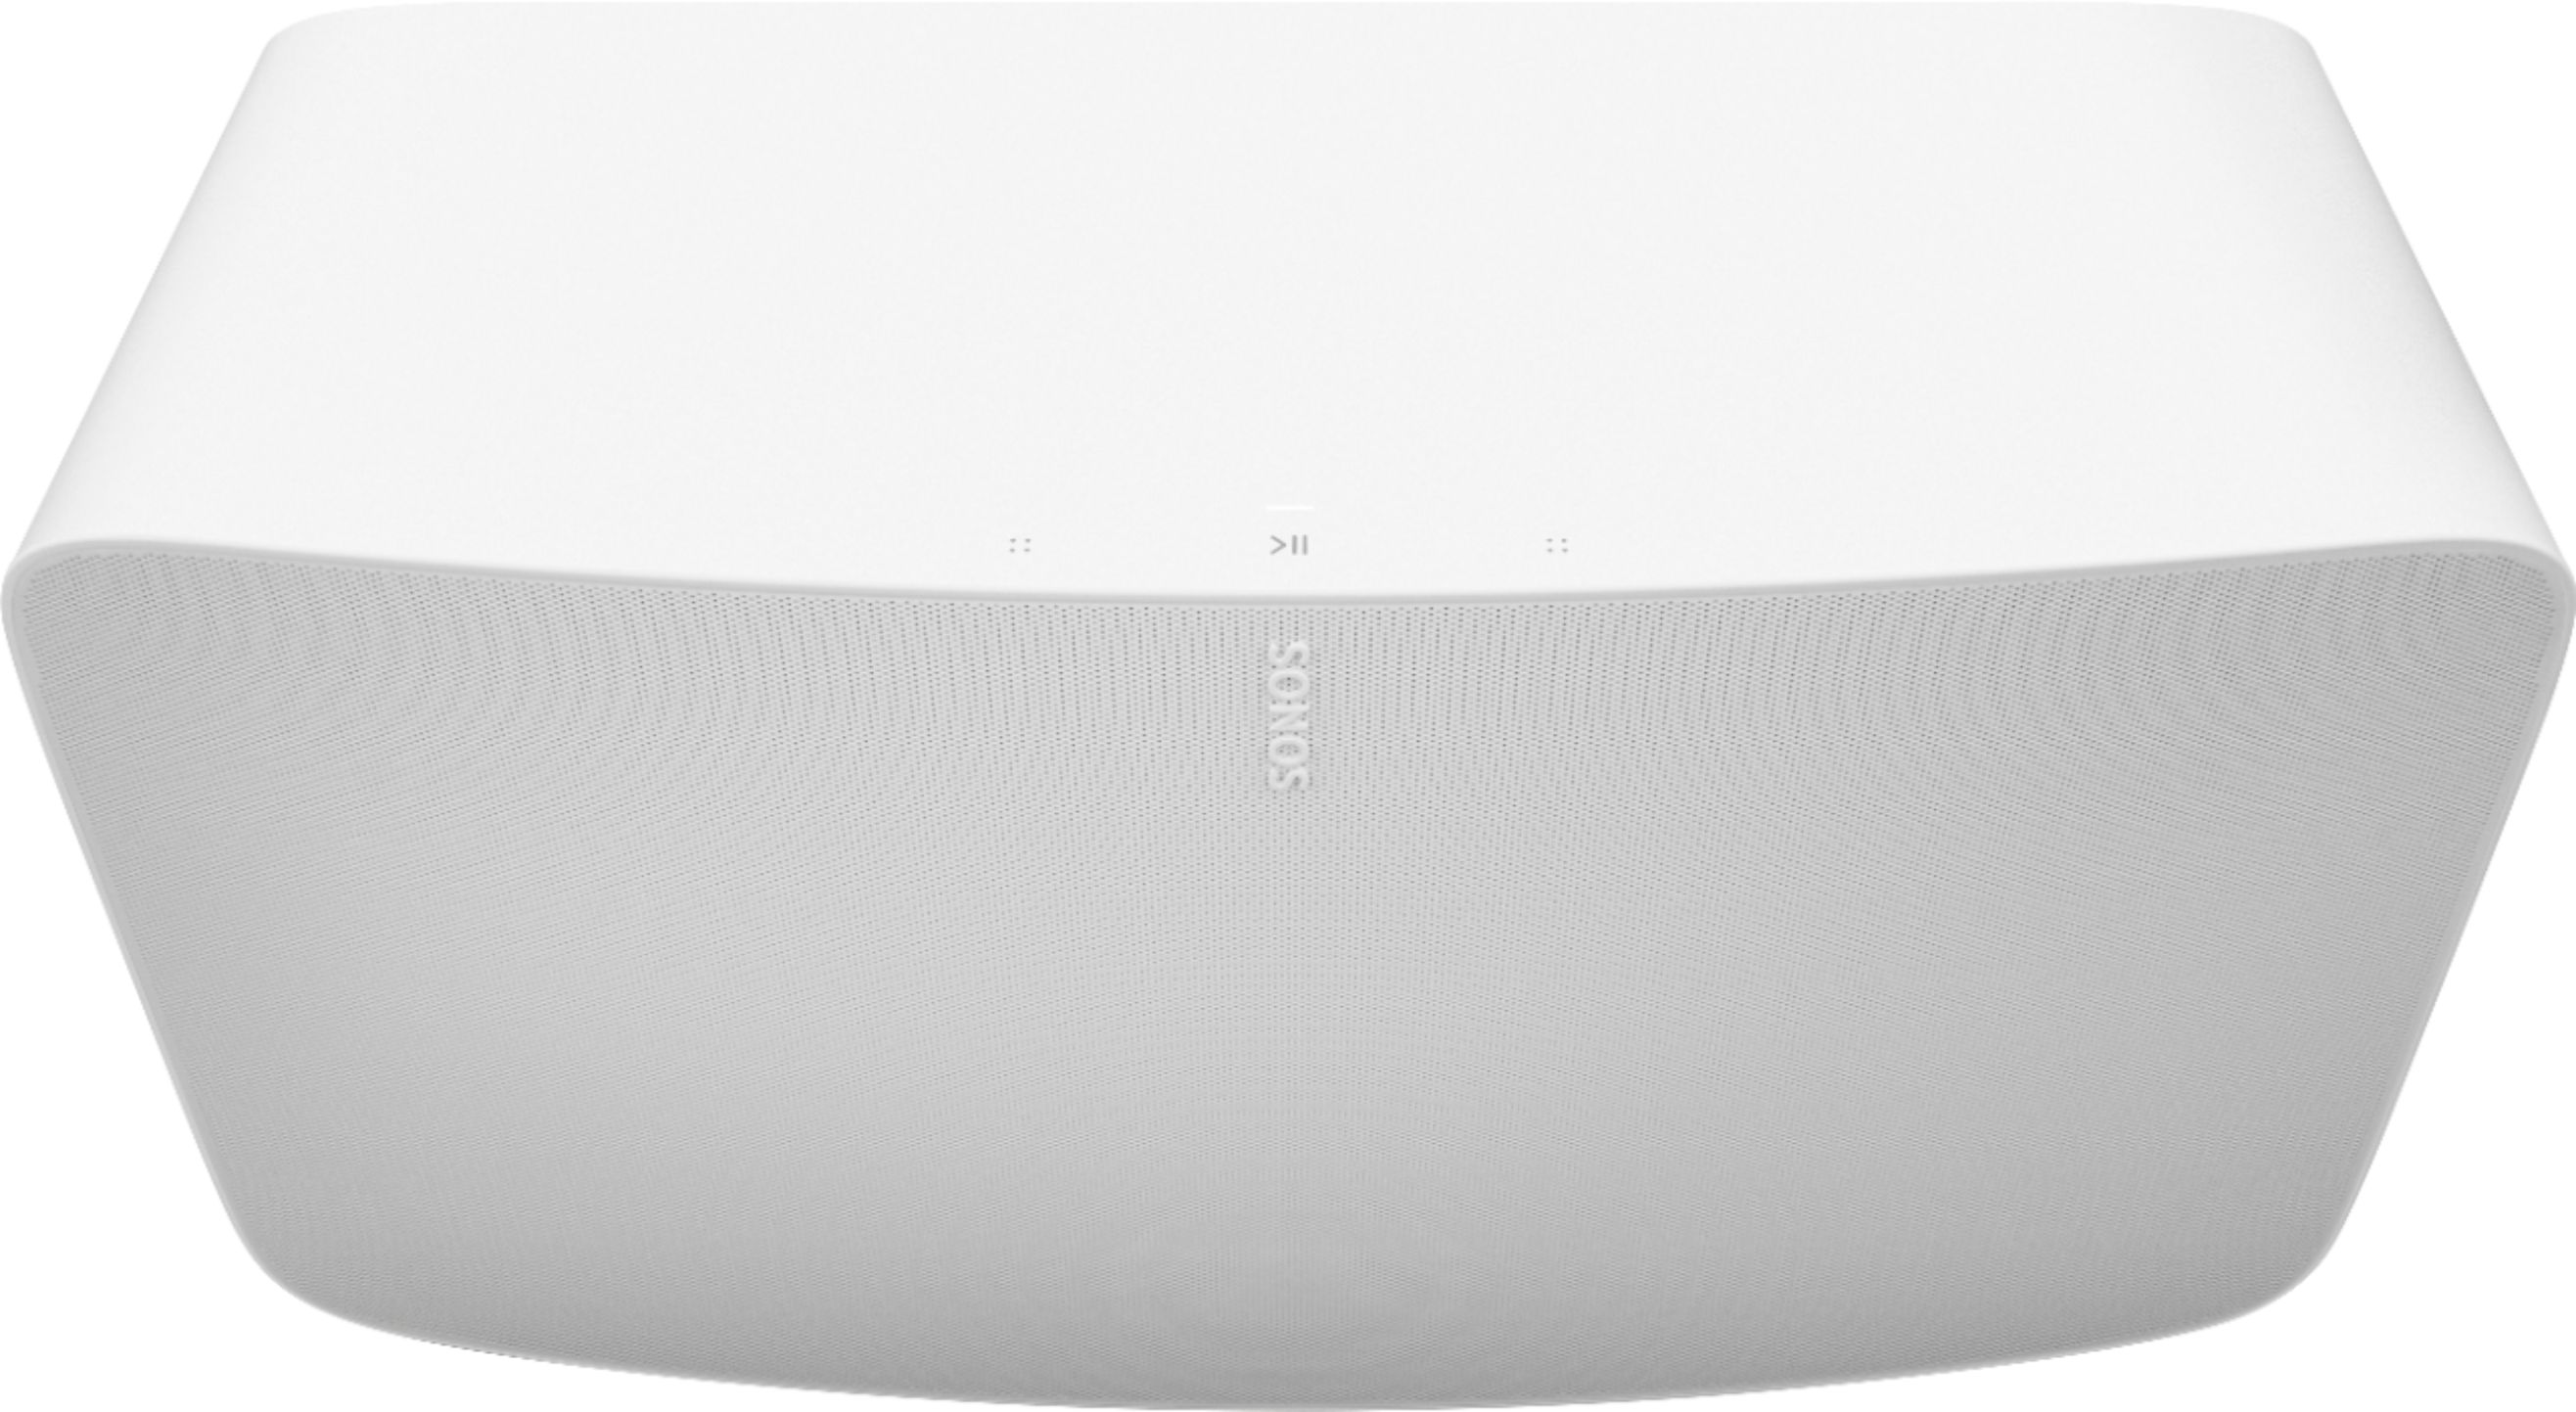 Sonos Speaker White FIVE1US1 - Best Buy